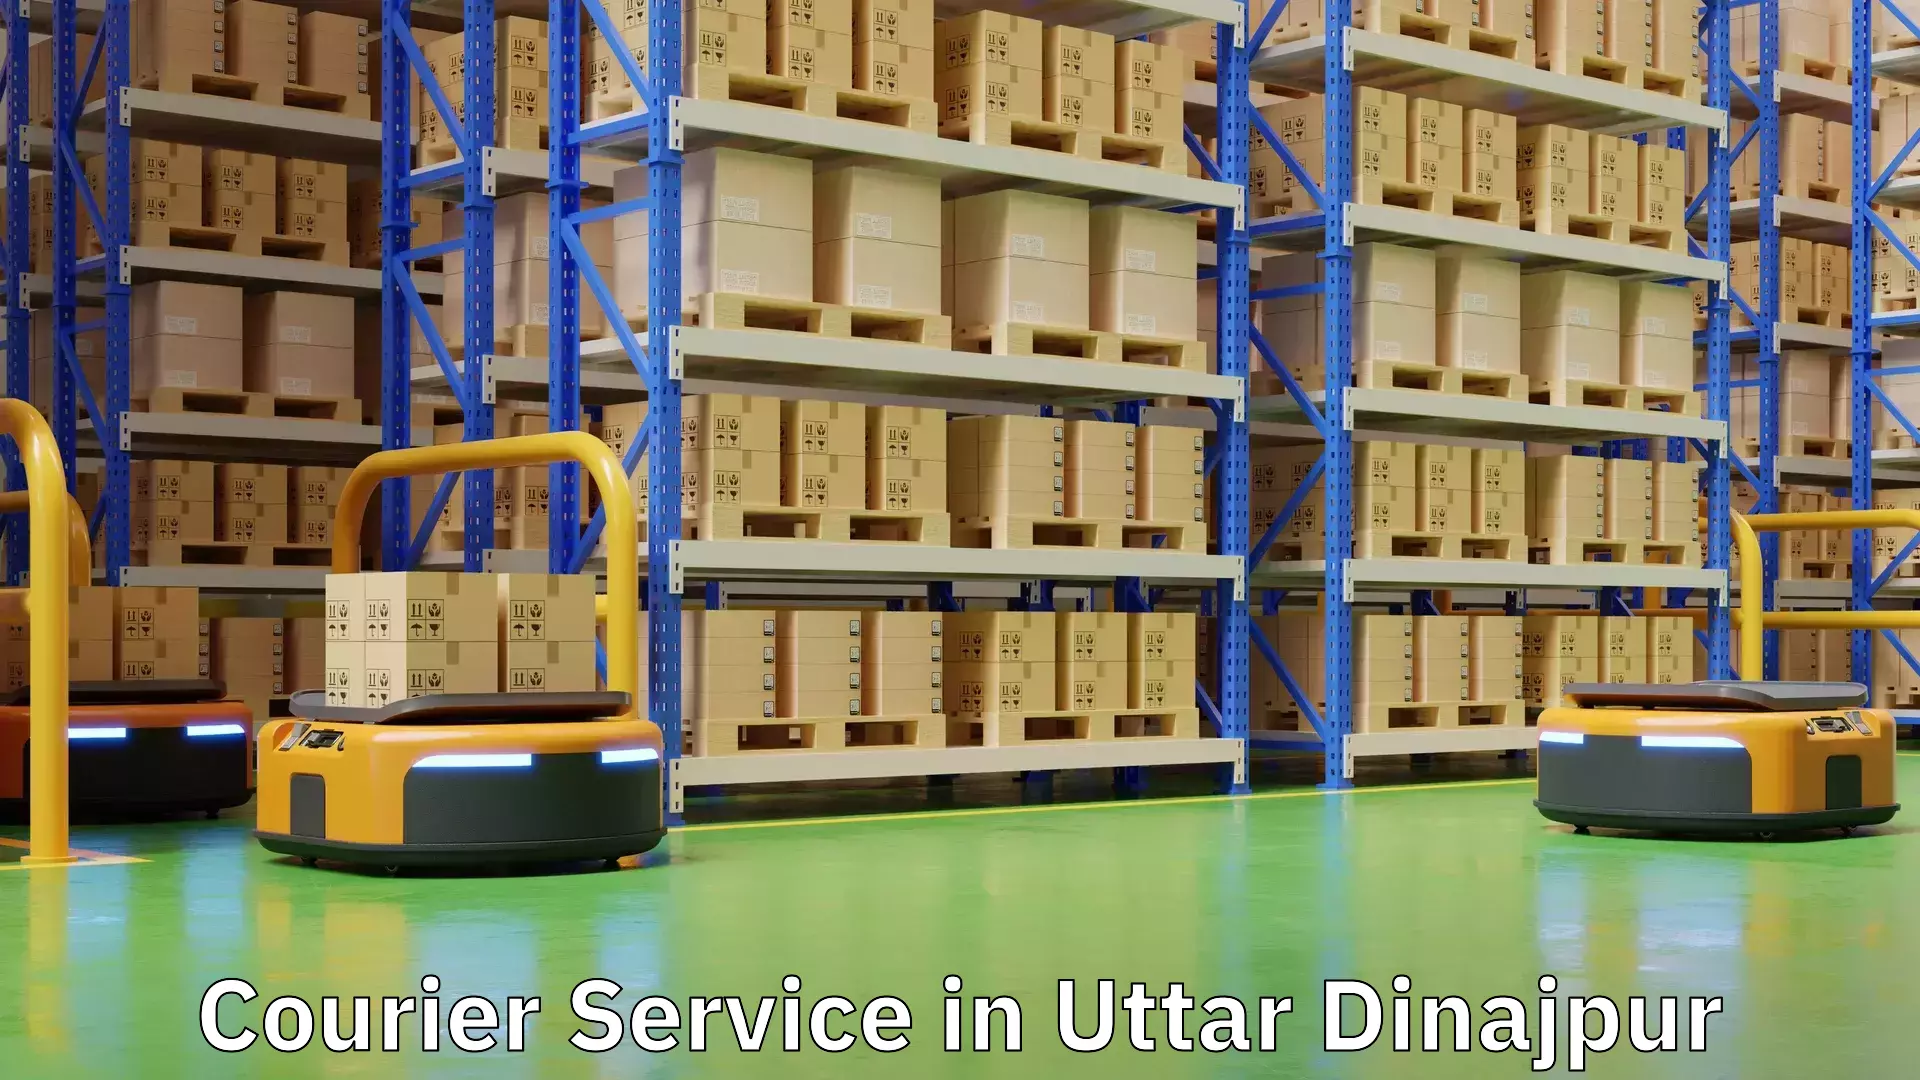 Specialized shipment handling in Uttar Dinajpur